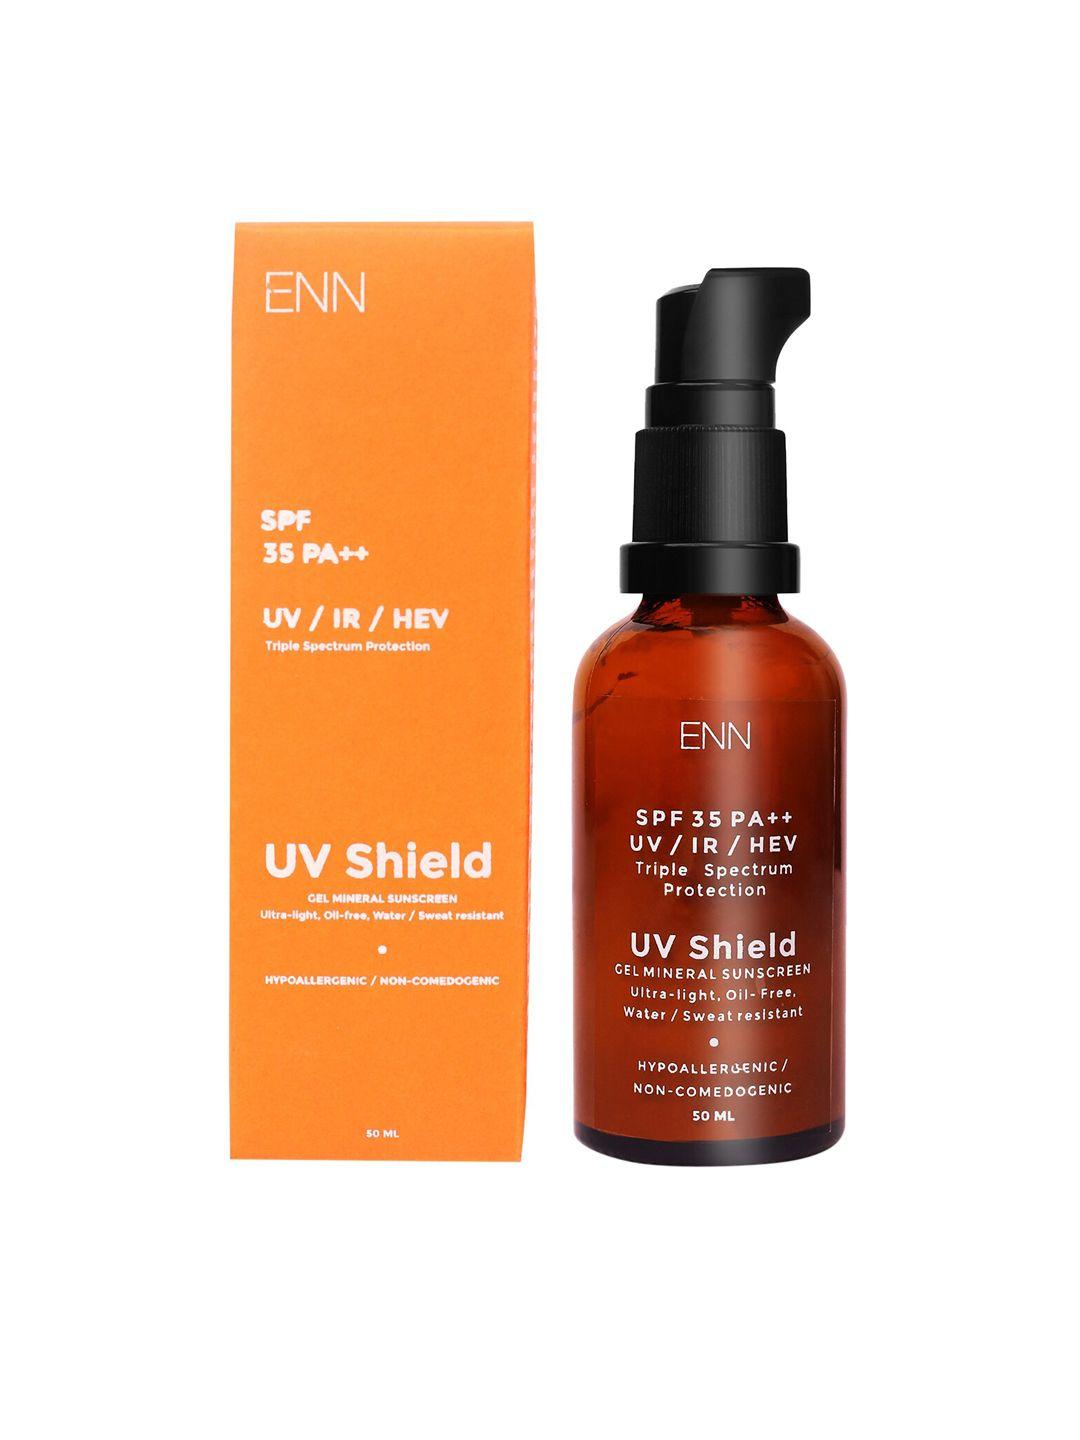 enn-uv-shield-gel-mineral-sunscreen-with-uv/ir/hev-triple-spectrum-protection---50-ml